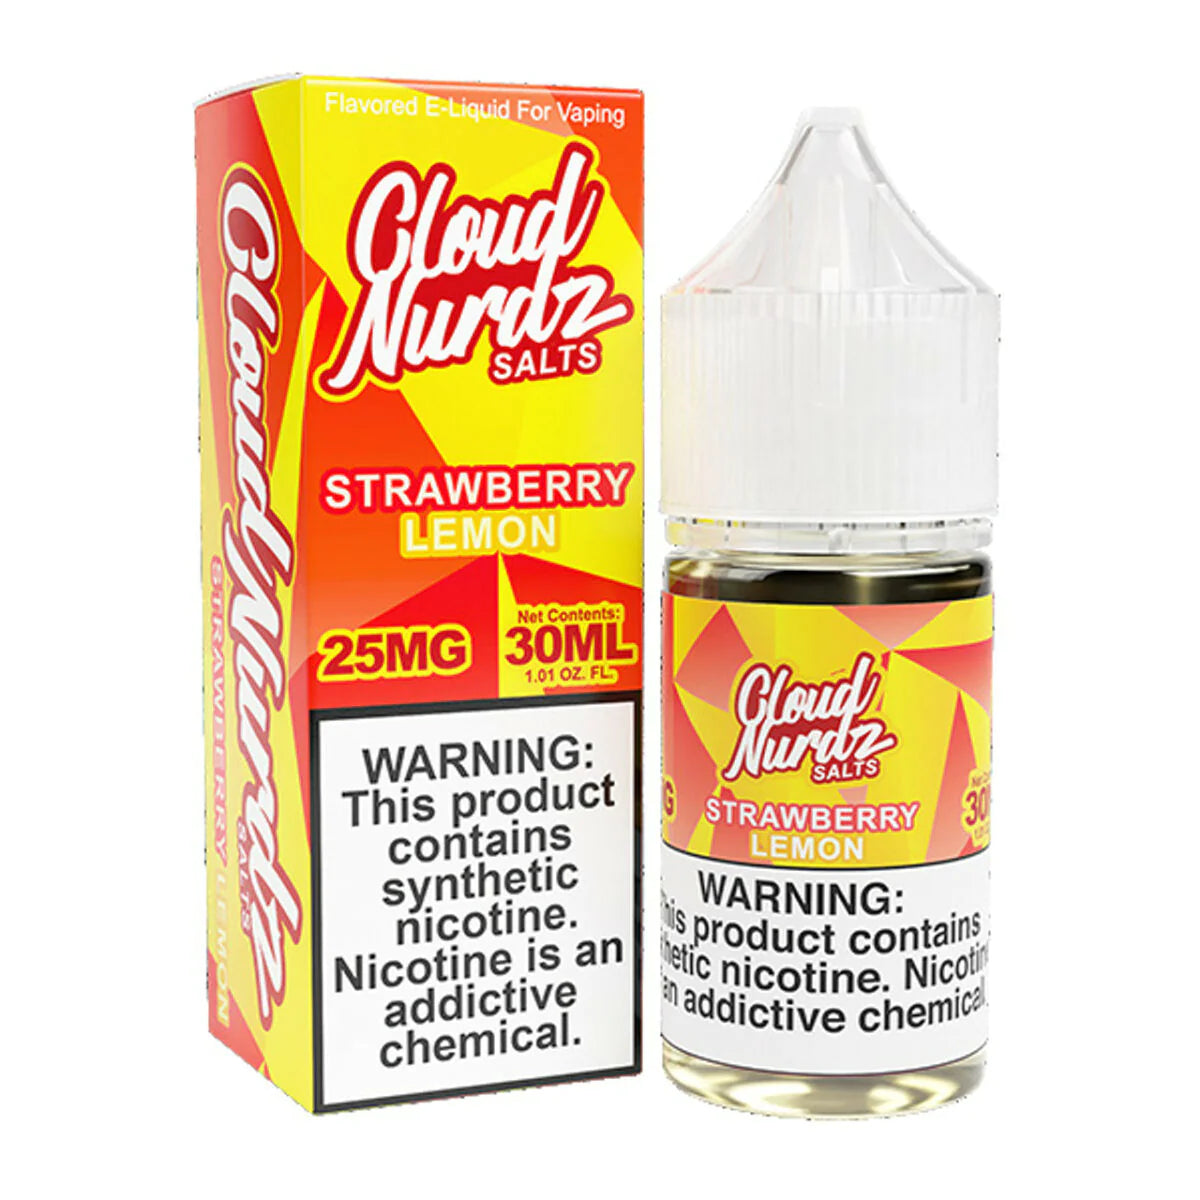 Cloud Nurdz Salts Tobacco-Free Nicotine Salt E-Liquid 30ML - Strawberry Lemon 